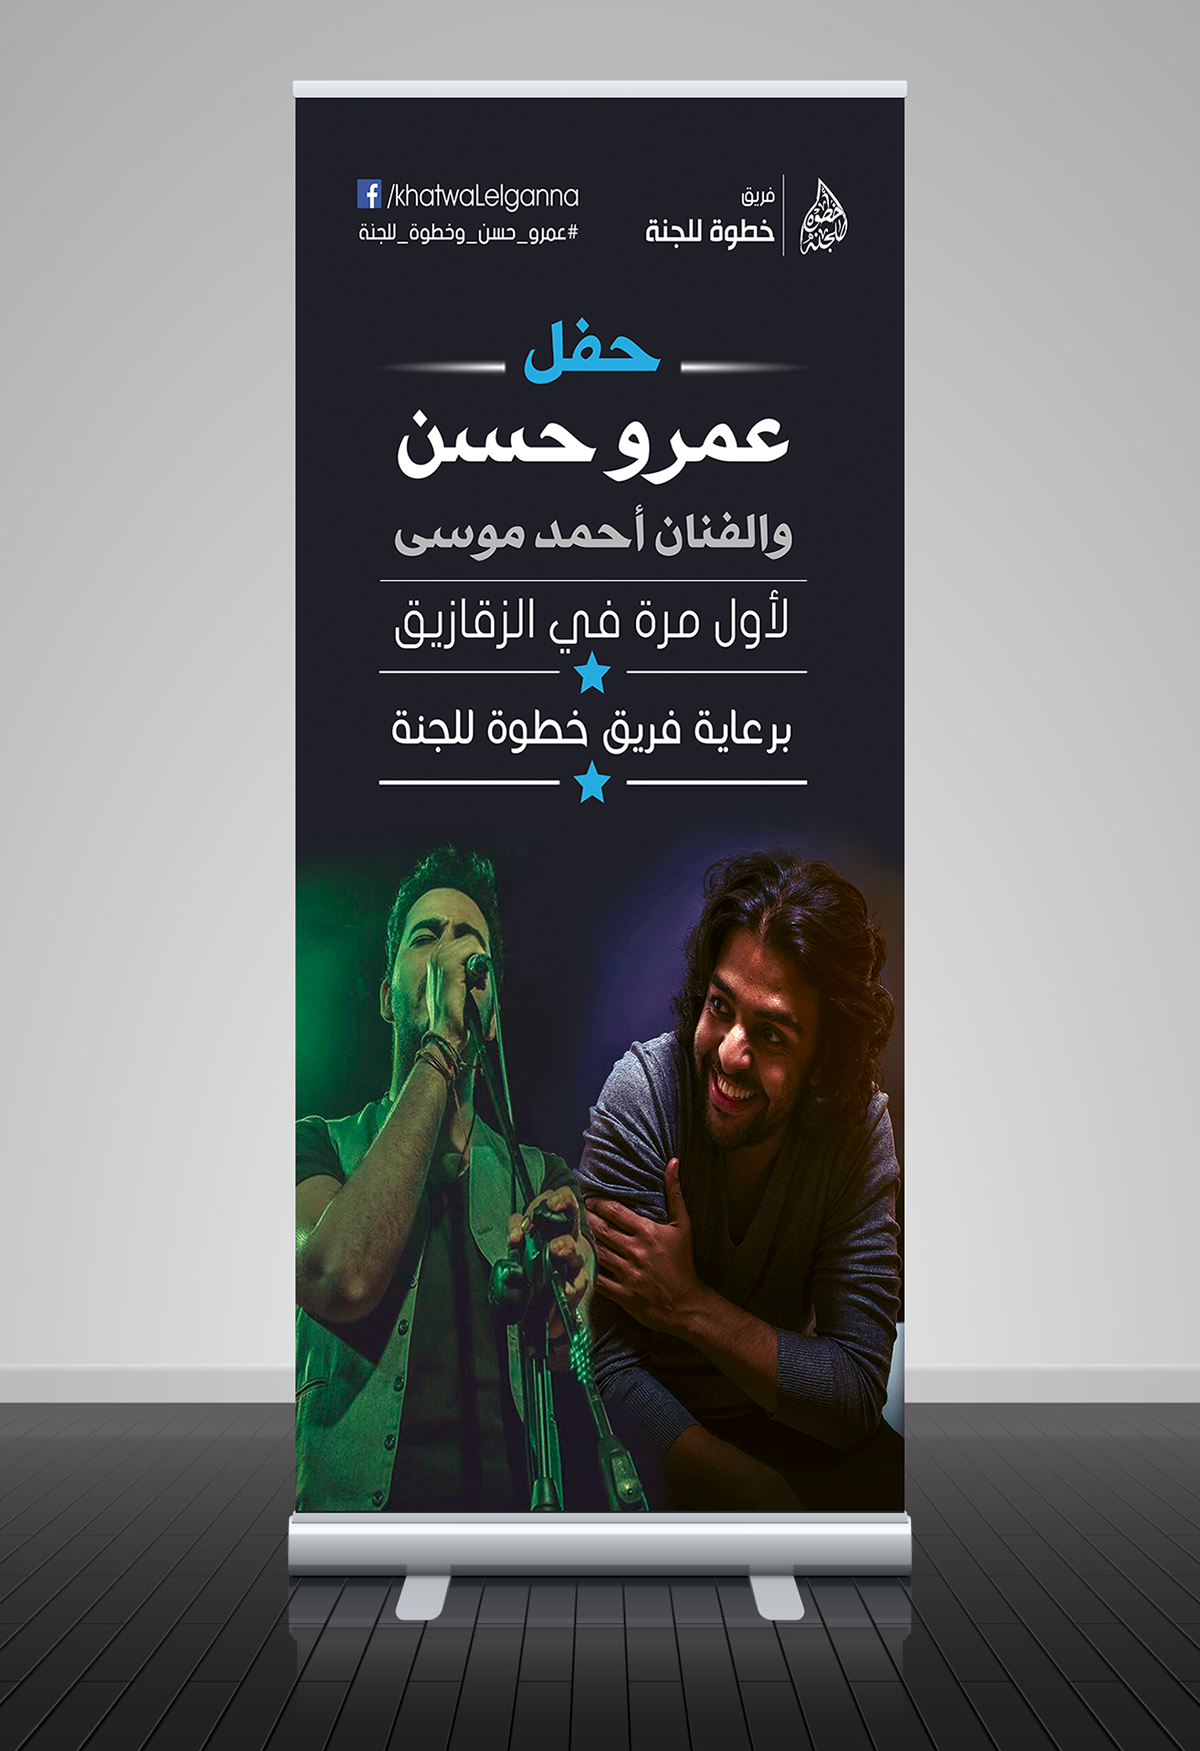 Amr Hassan khatwa lelganna zagazig concert Stand Roll tickets flyers